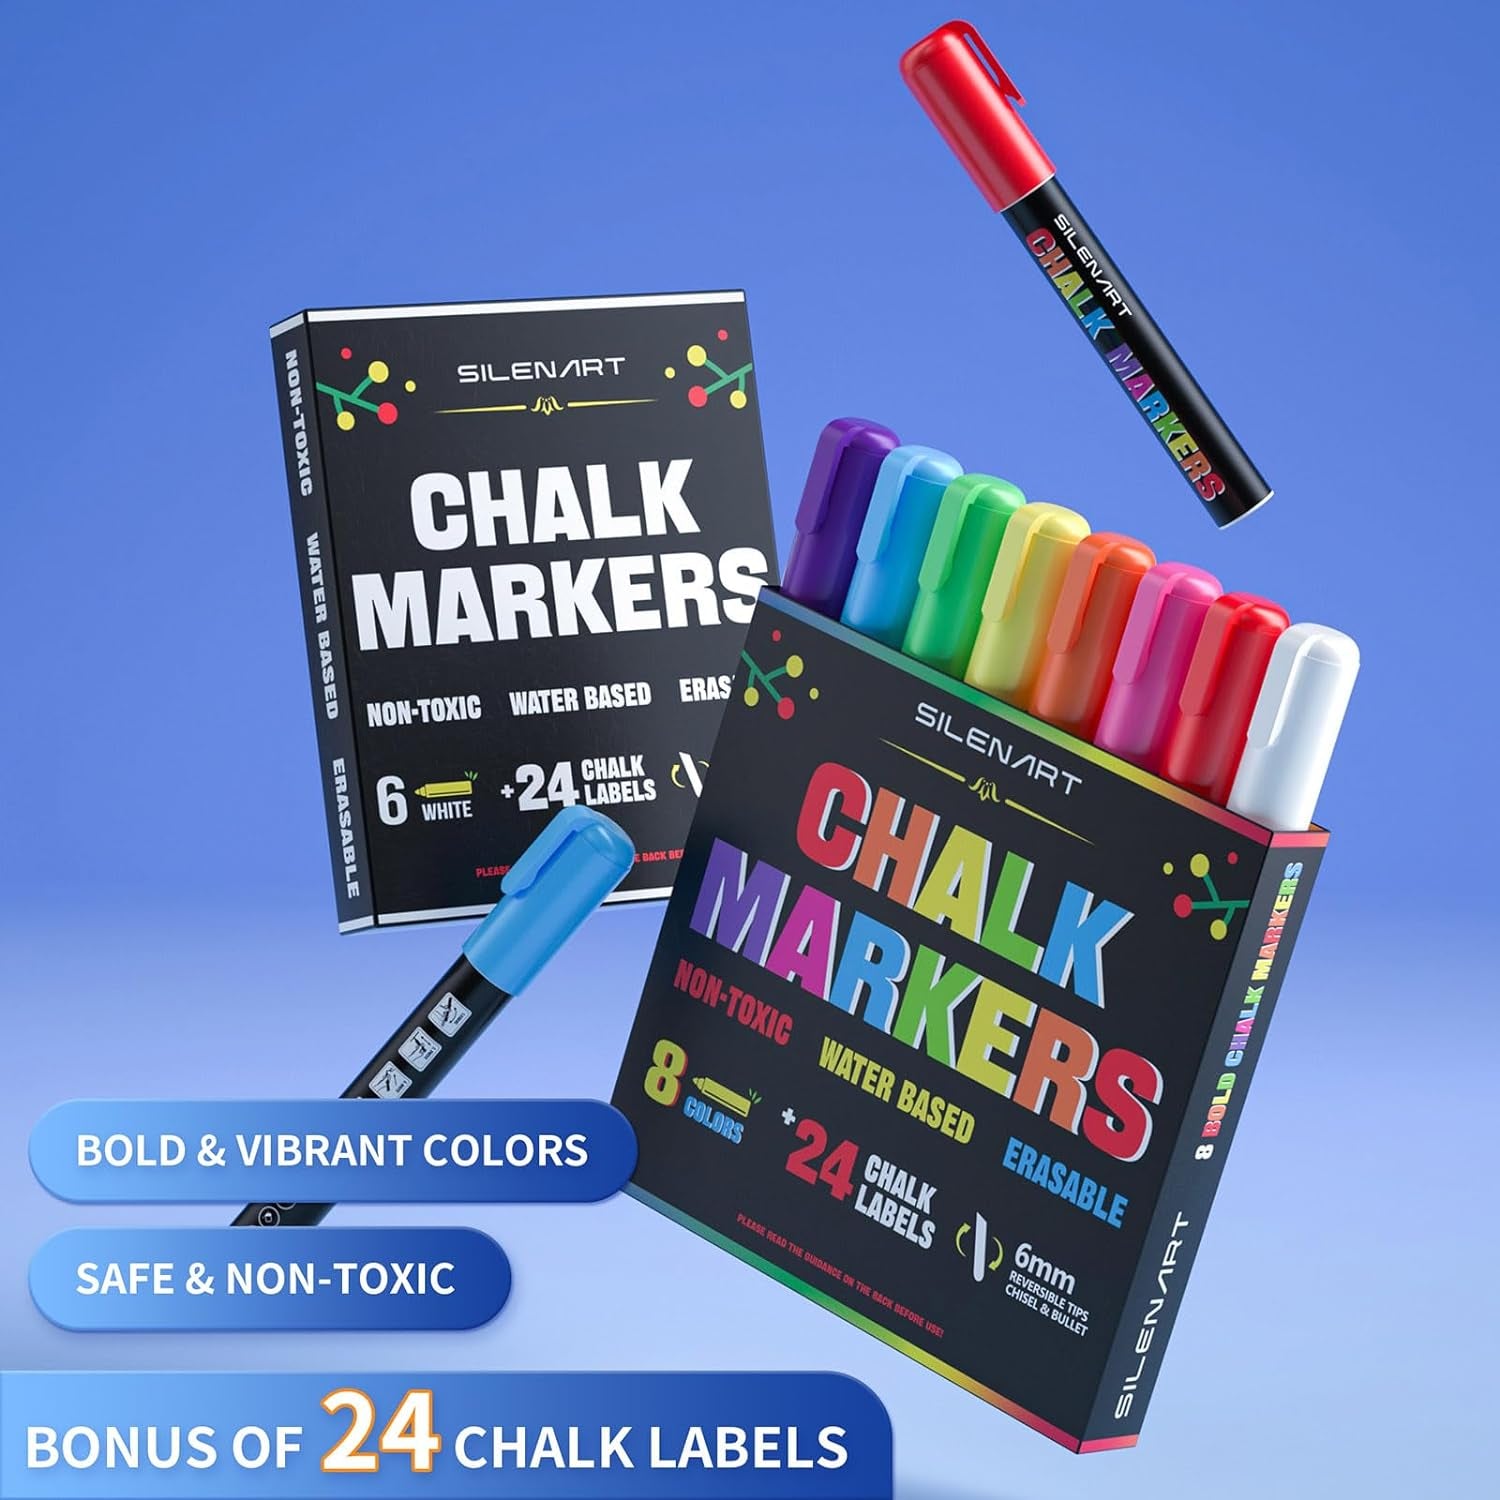 Liquid Chalk Markers - 8 Color, 24 Labels, Reversible Tips - Dry & Wet Erase Chalkboad Markers for Blackboard Fisrt Day of School Board Window Car Glass Chalk Marker Chalk Pens